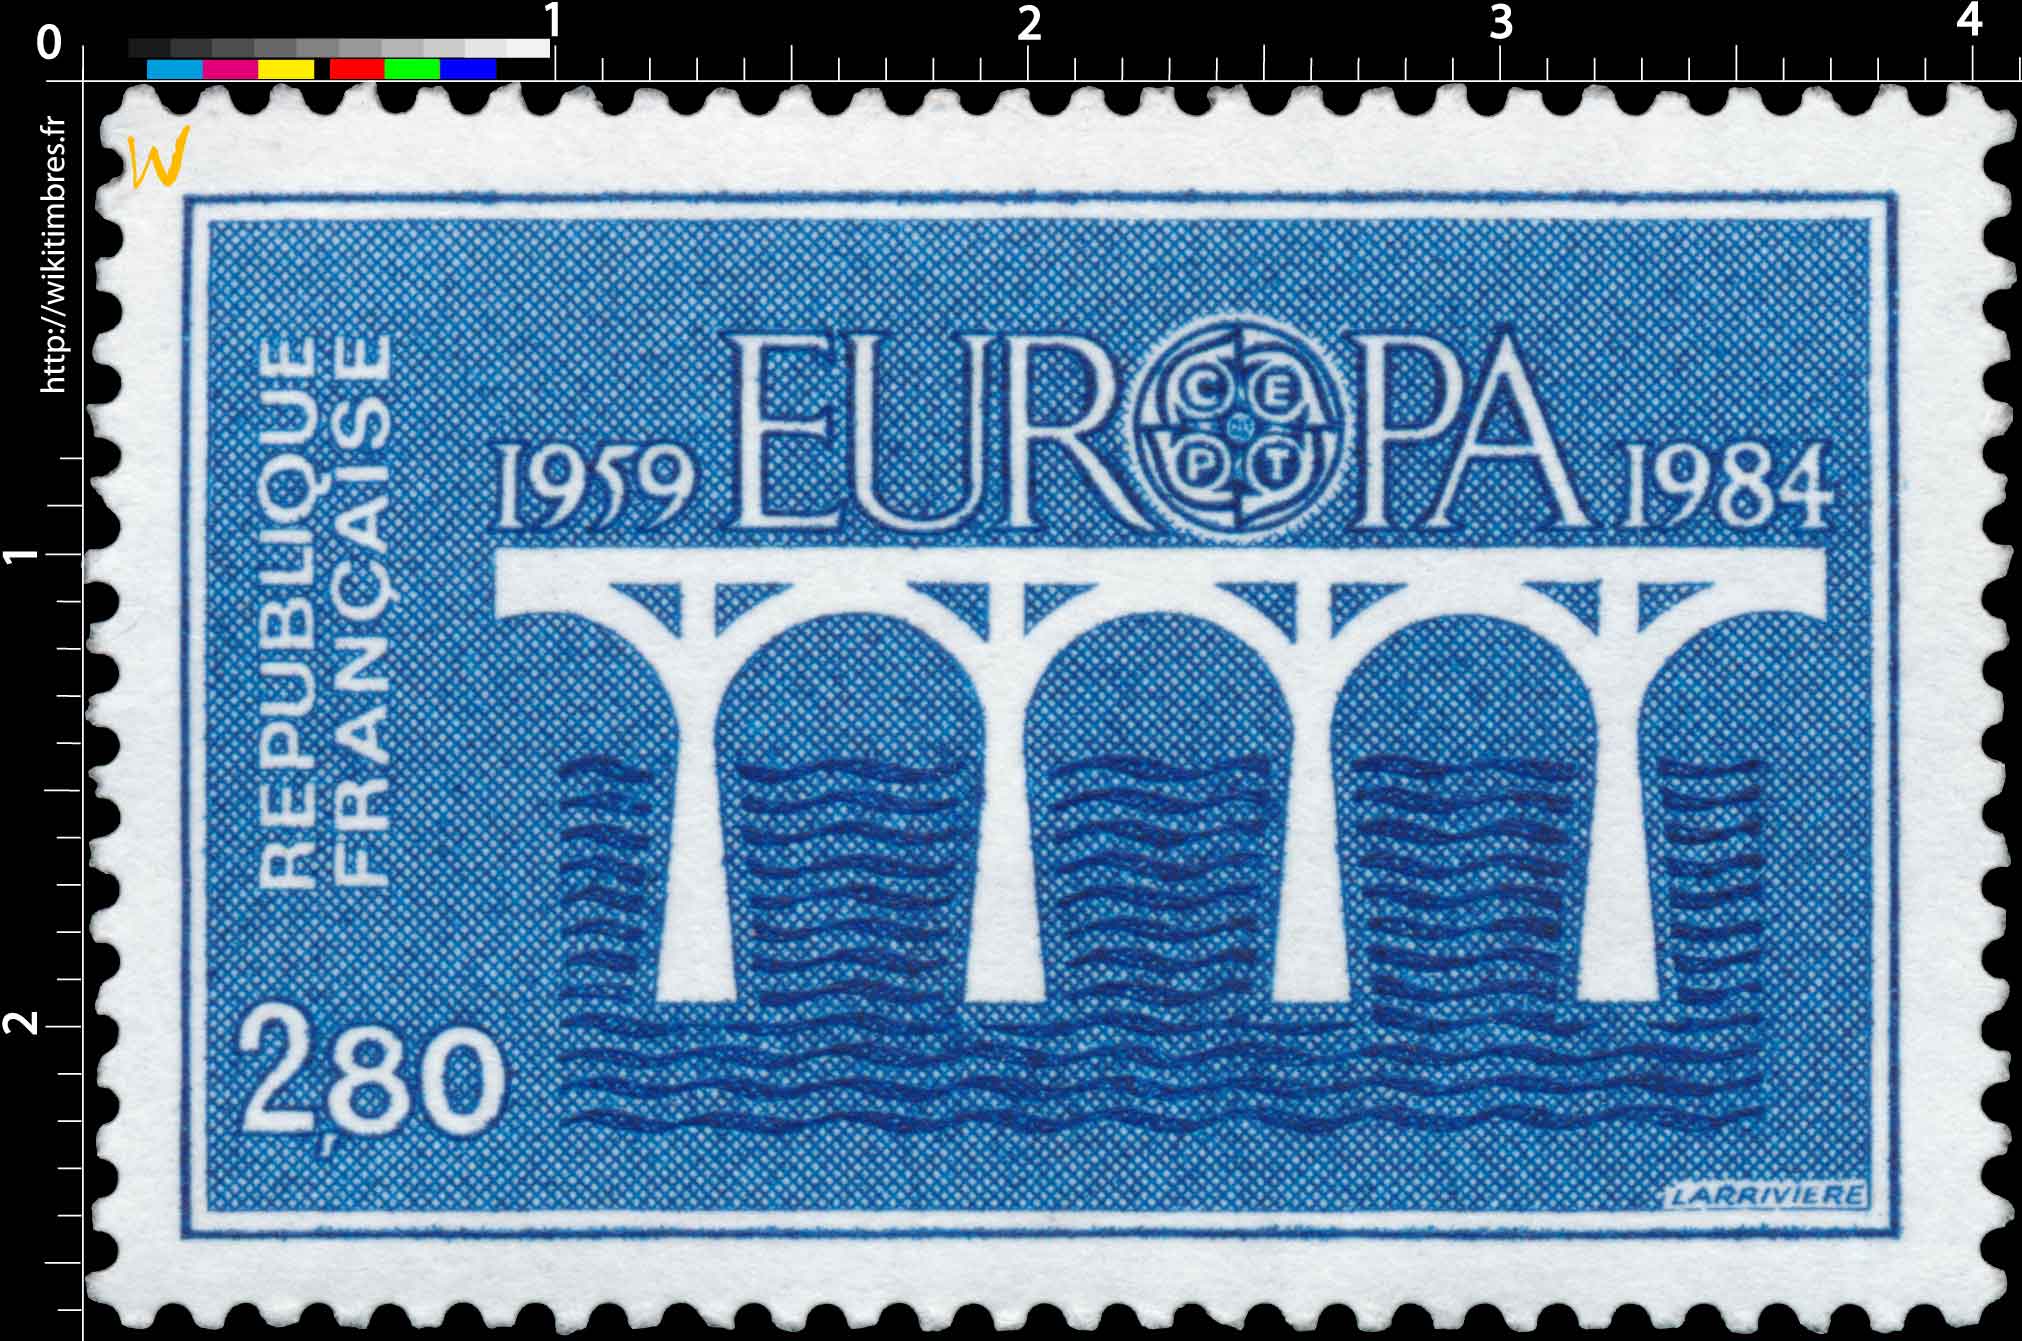 1984 EUROPA CEPT 1959-1984